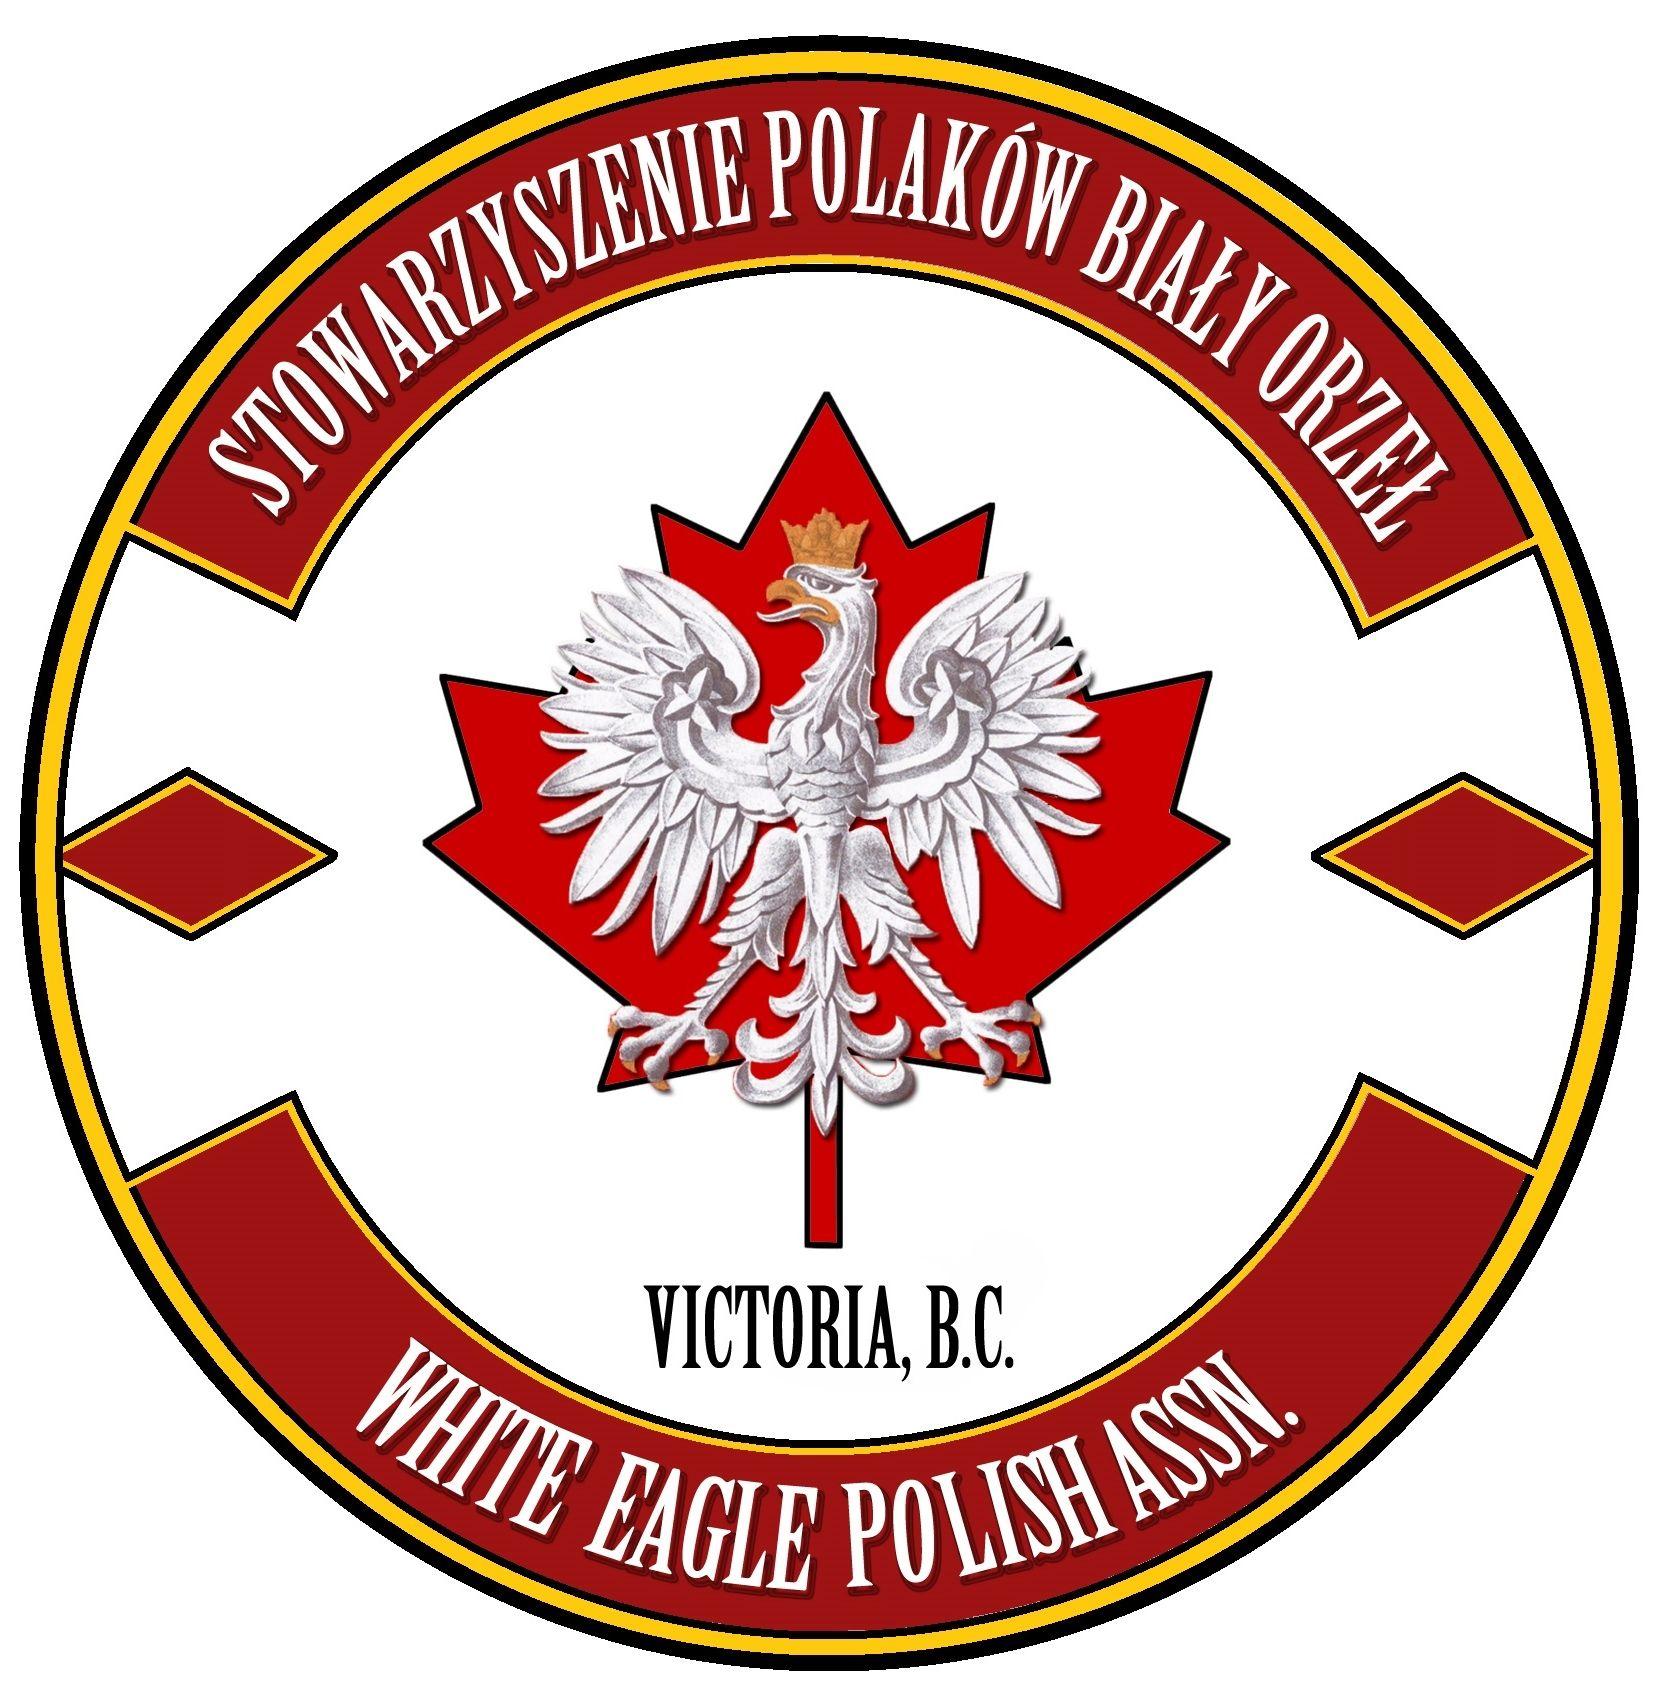 Red and White Eagle Logo - White Eagle Polish Hall. Victoria Polish Community Hall